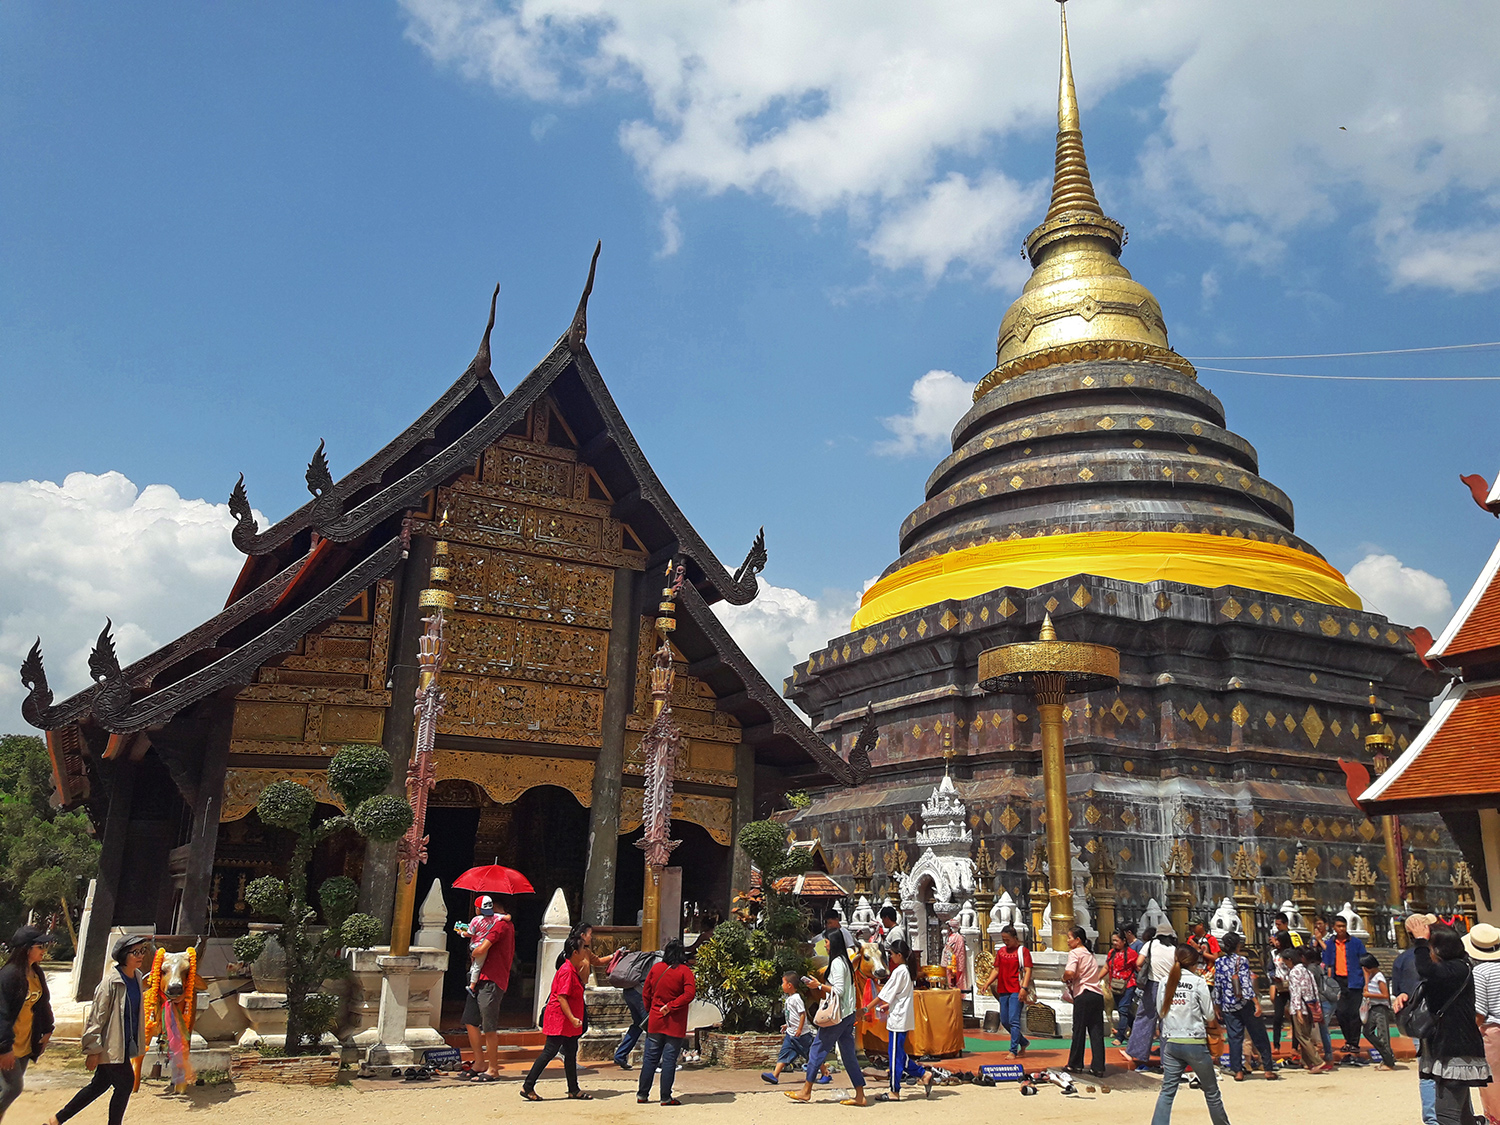 Cosa vedere a Lampang: Wat Phrathat Lampang Luang temple